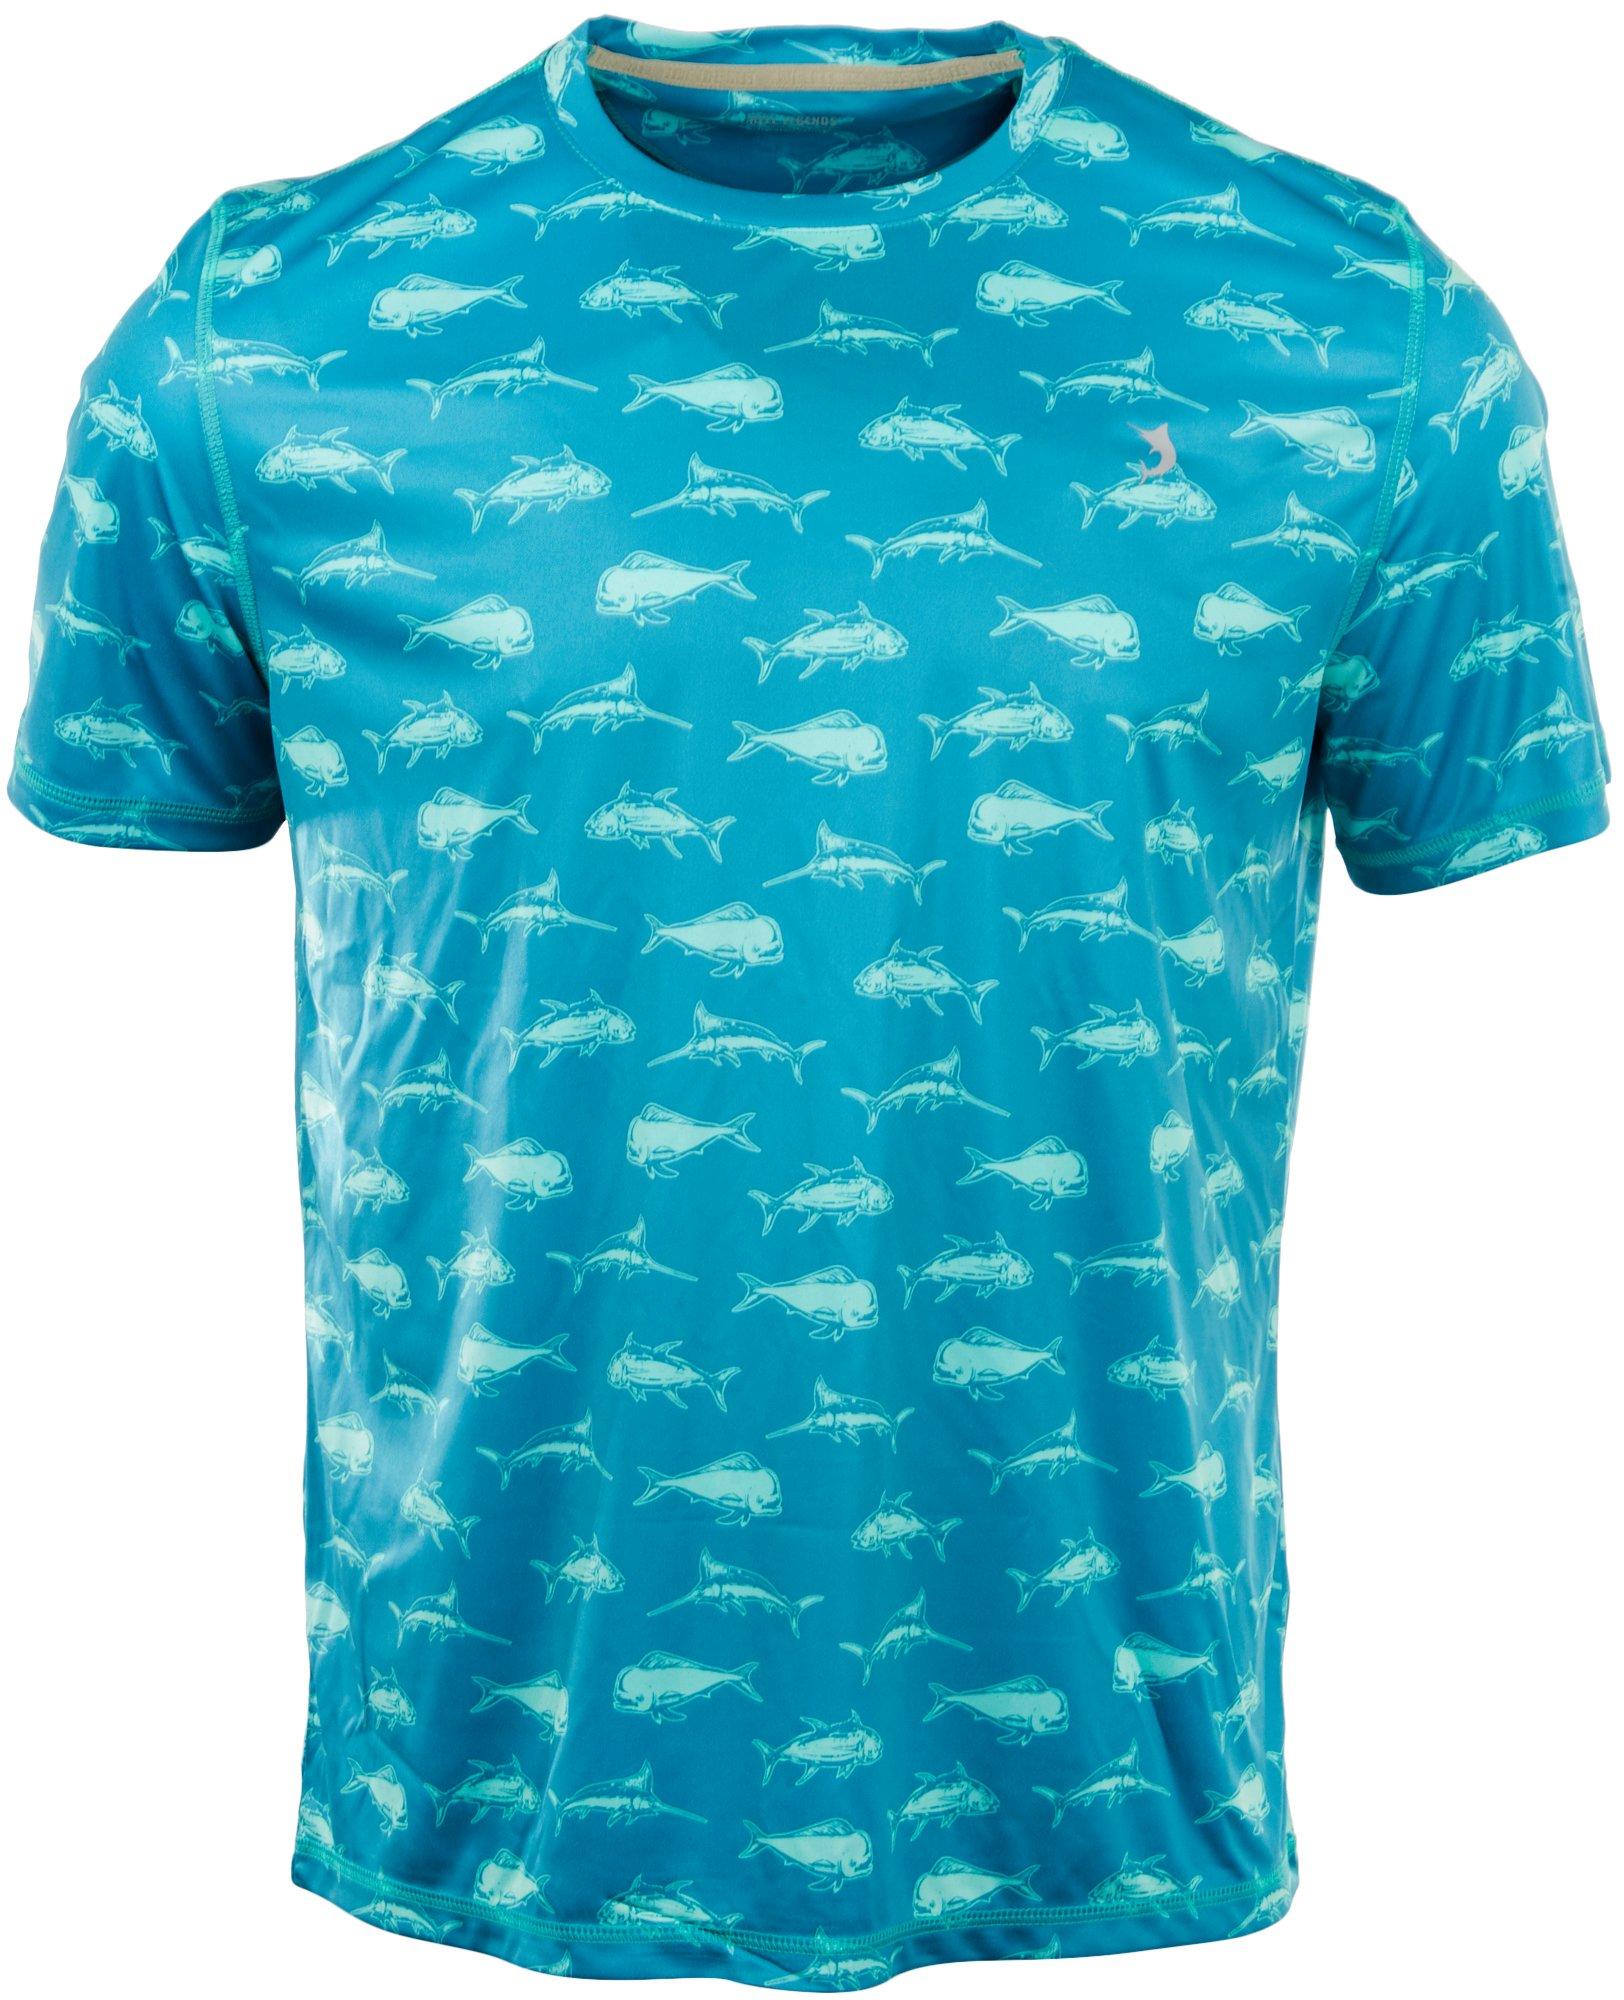 Mens Reel-Tec Fish Print Short Sleeve T-Shirt